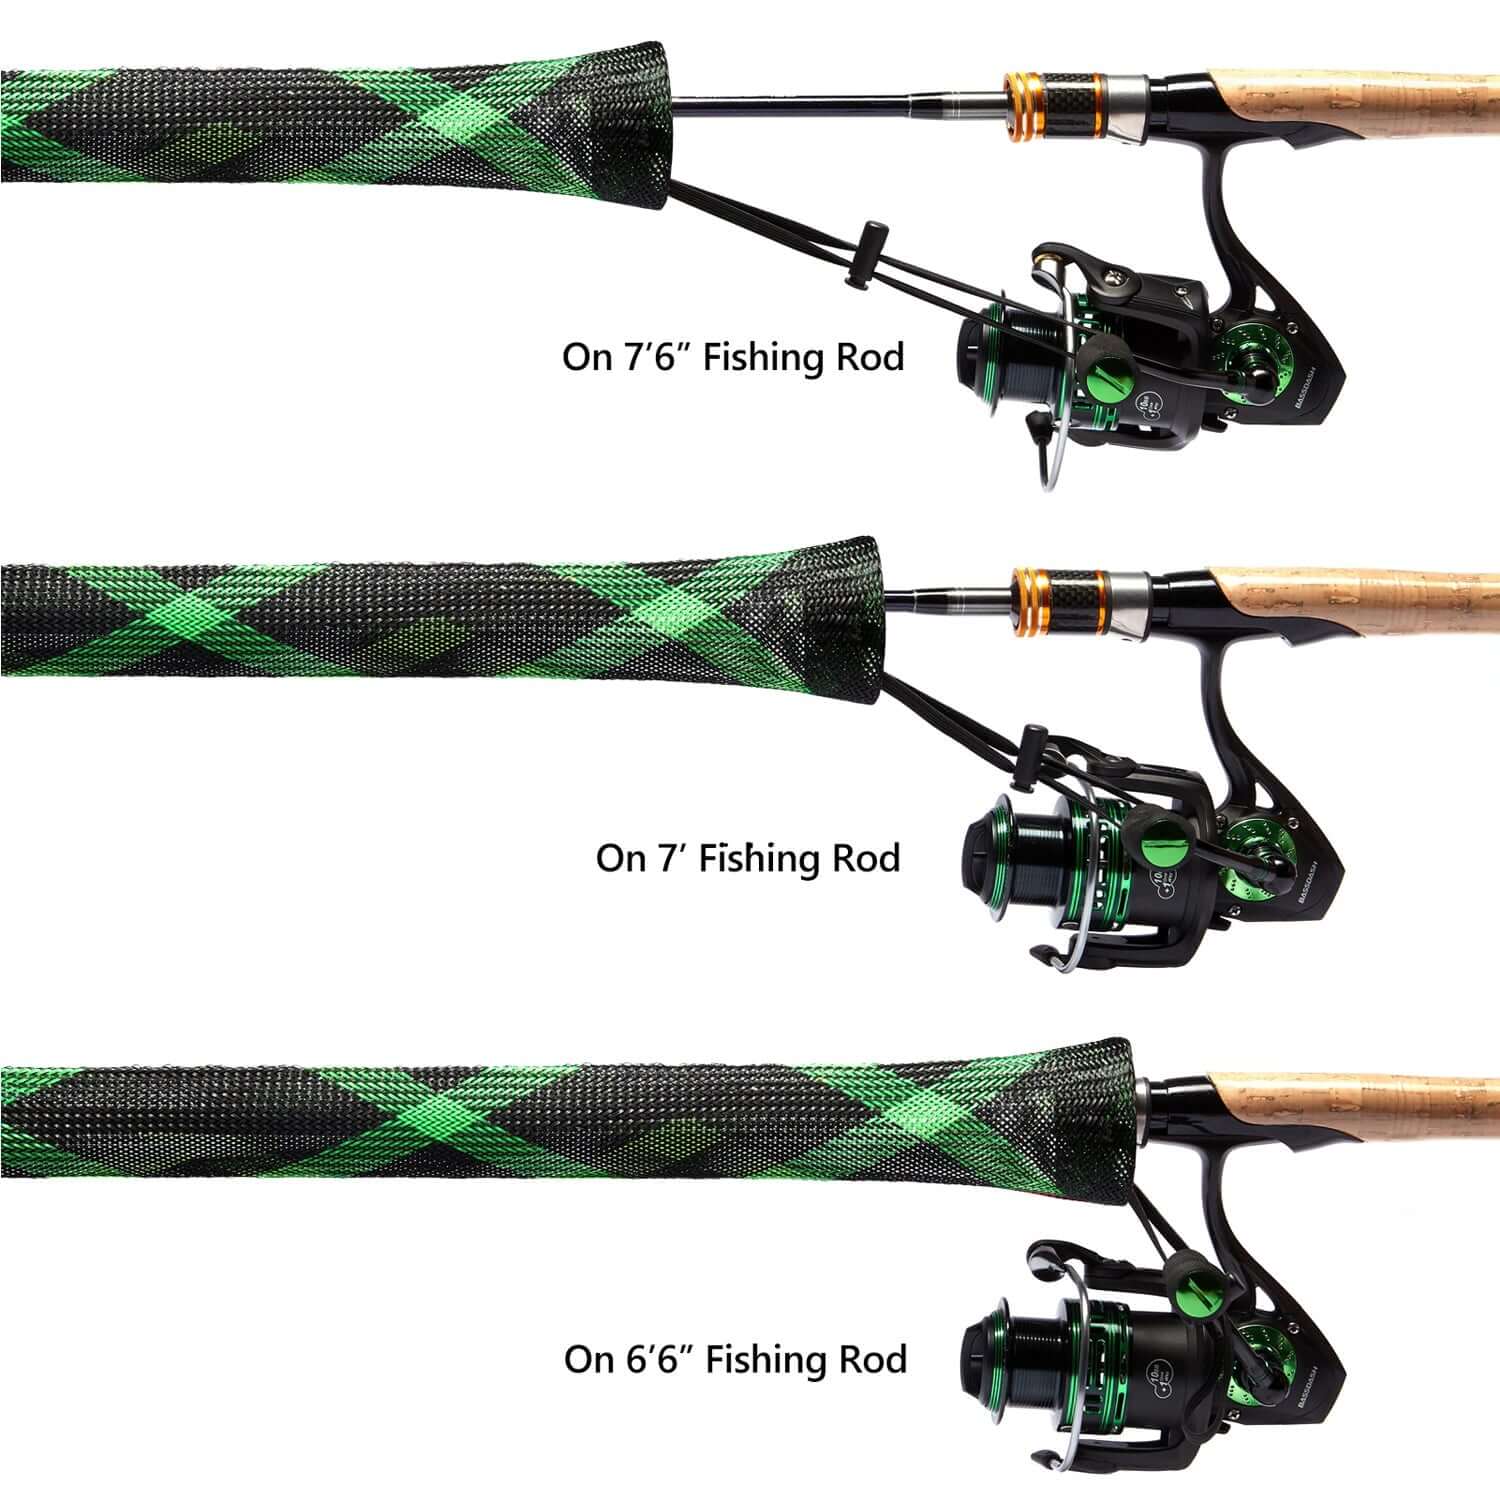 Fishing Rod Protection Sleeve - Adjustable